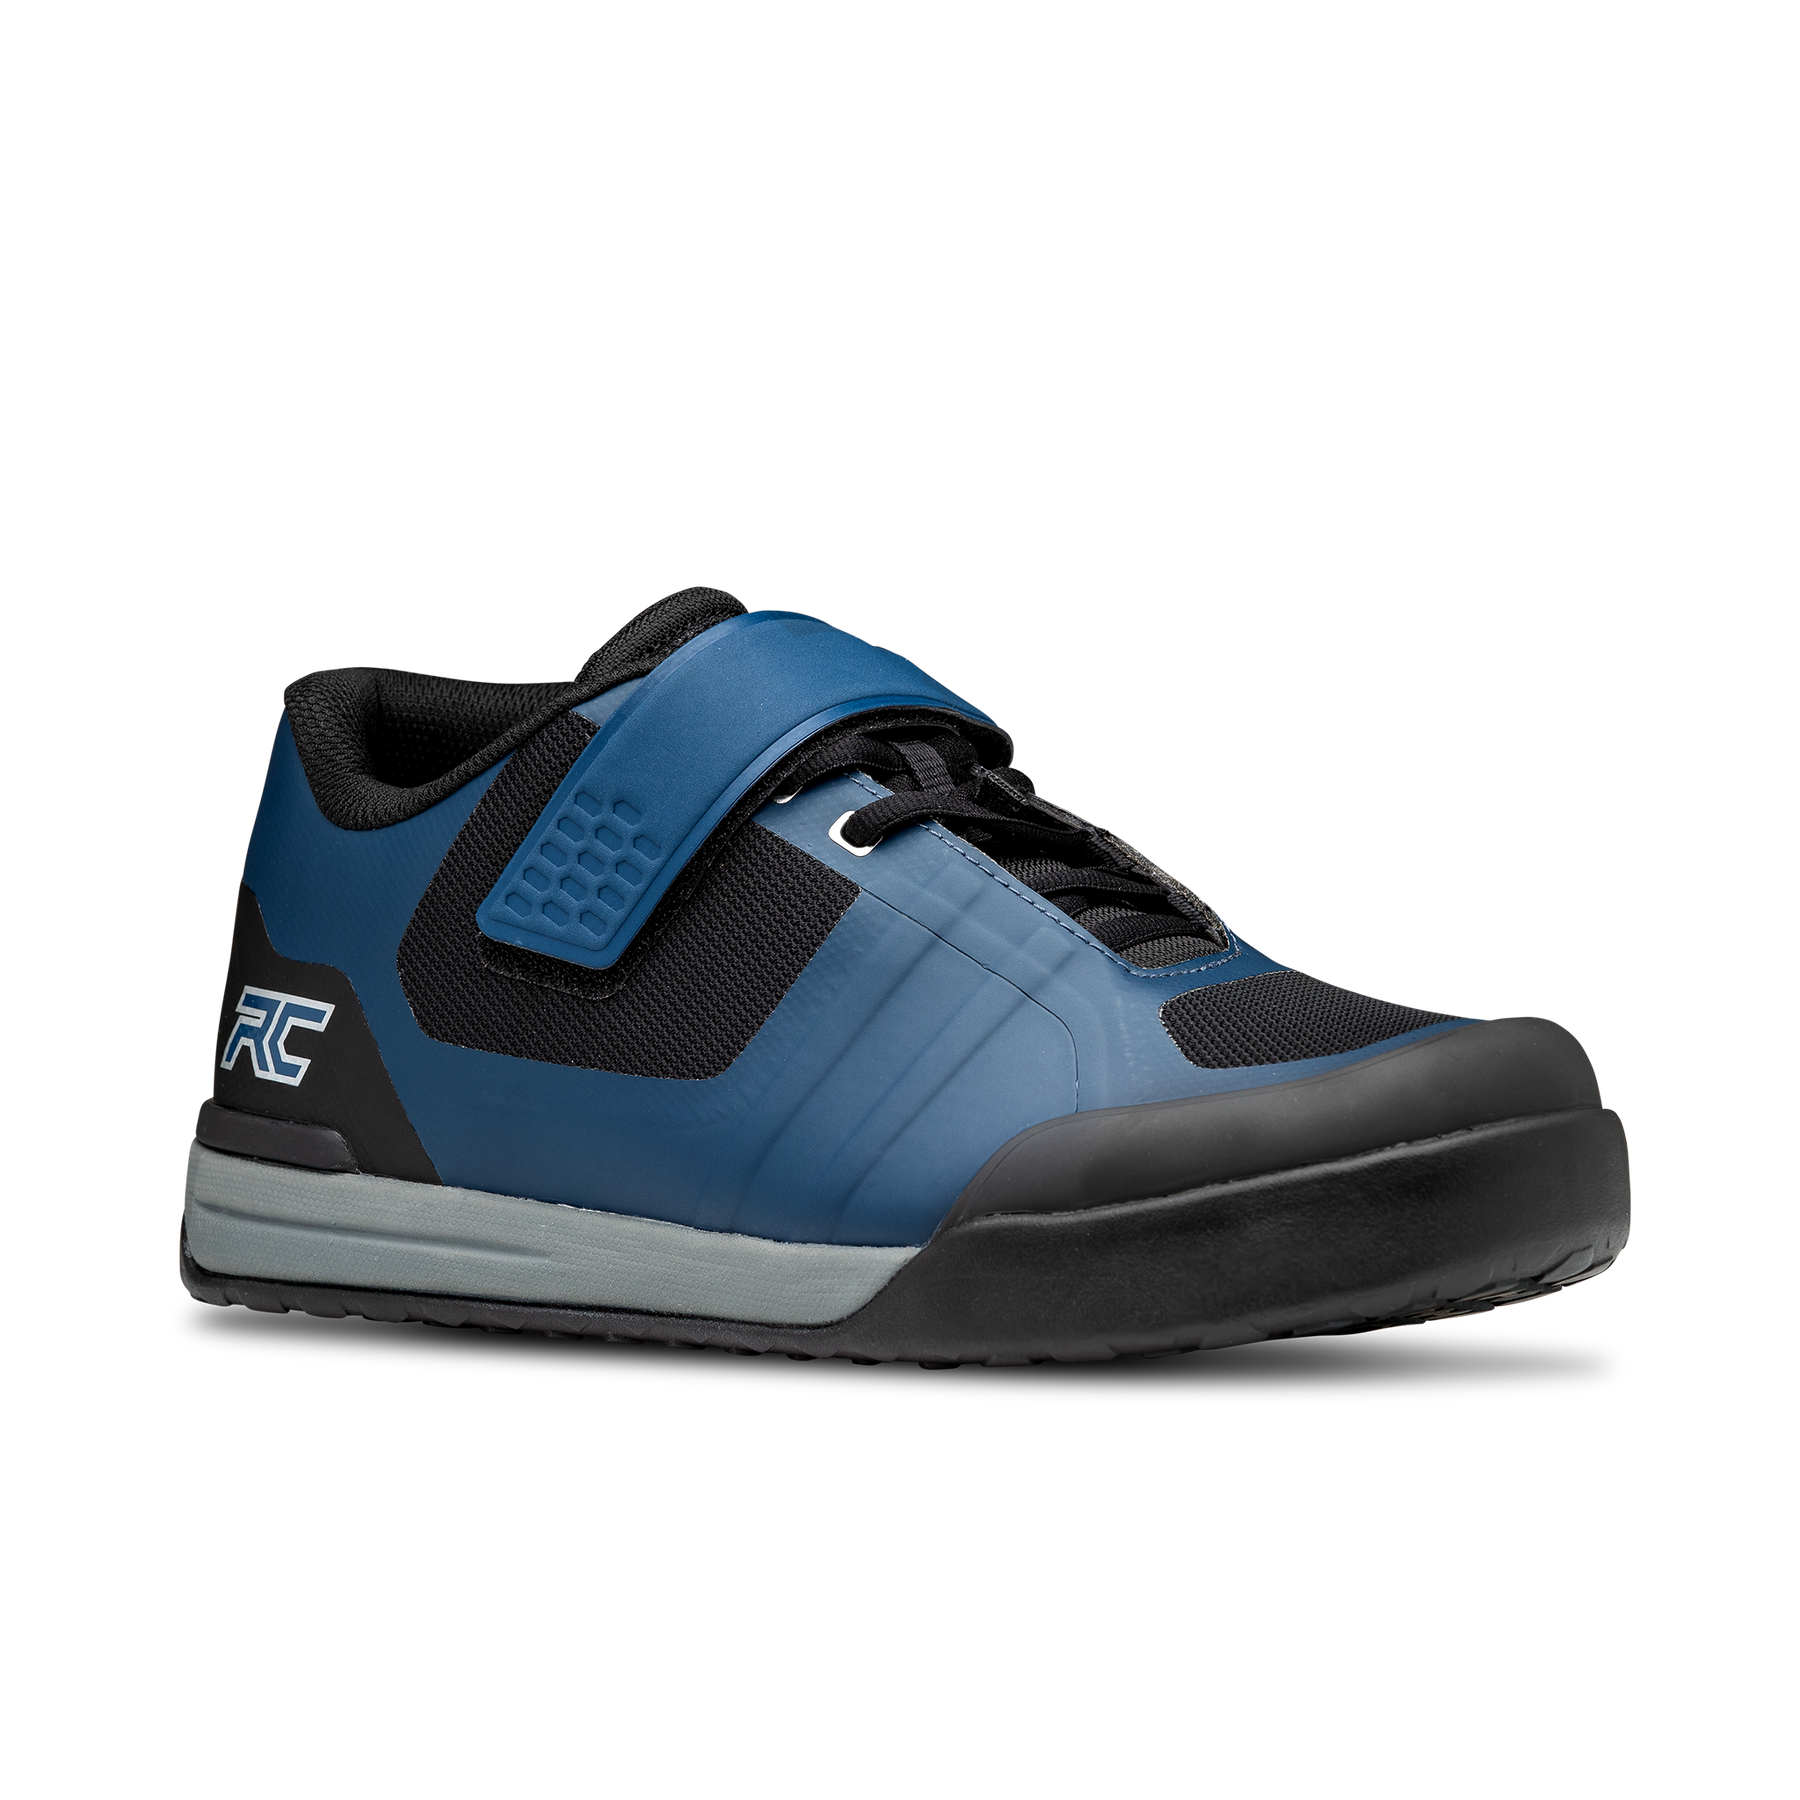 Ride Concepts Transition Spd Shoes - US 11.5 - Marine Blue - Image 1